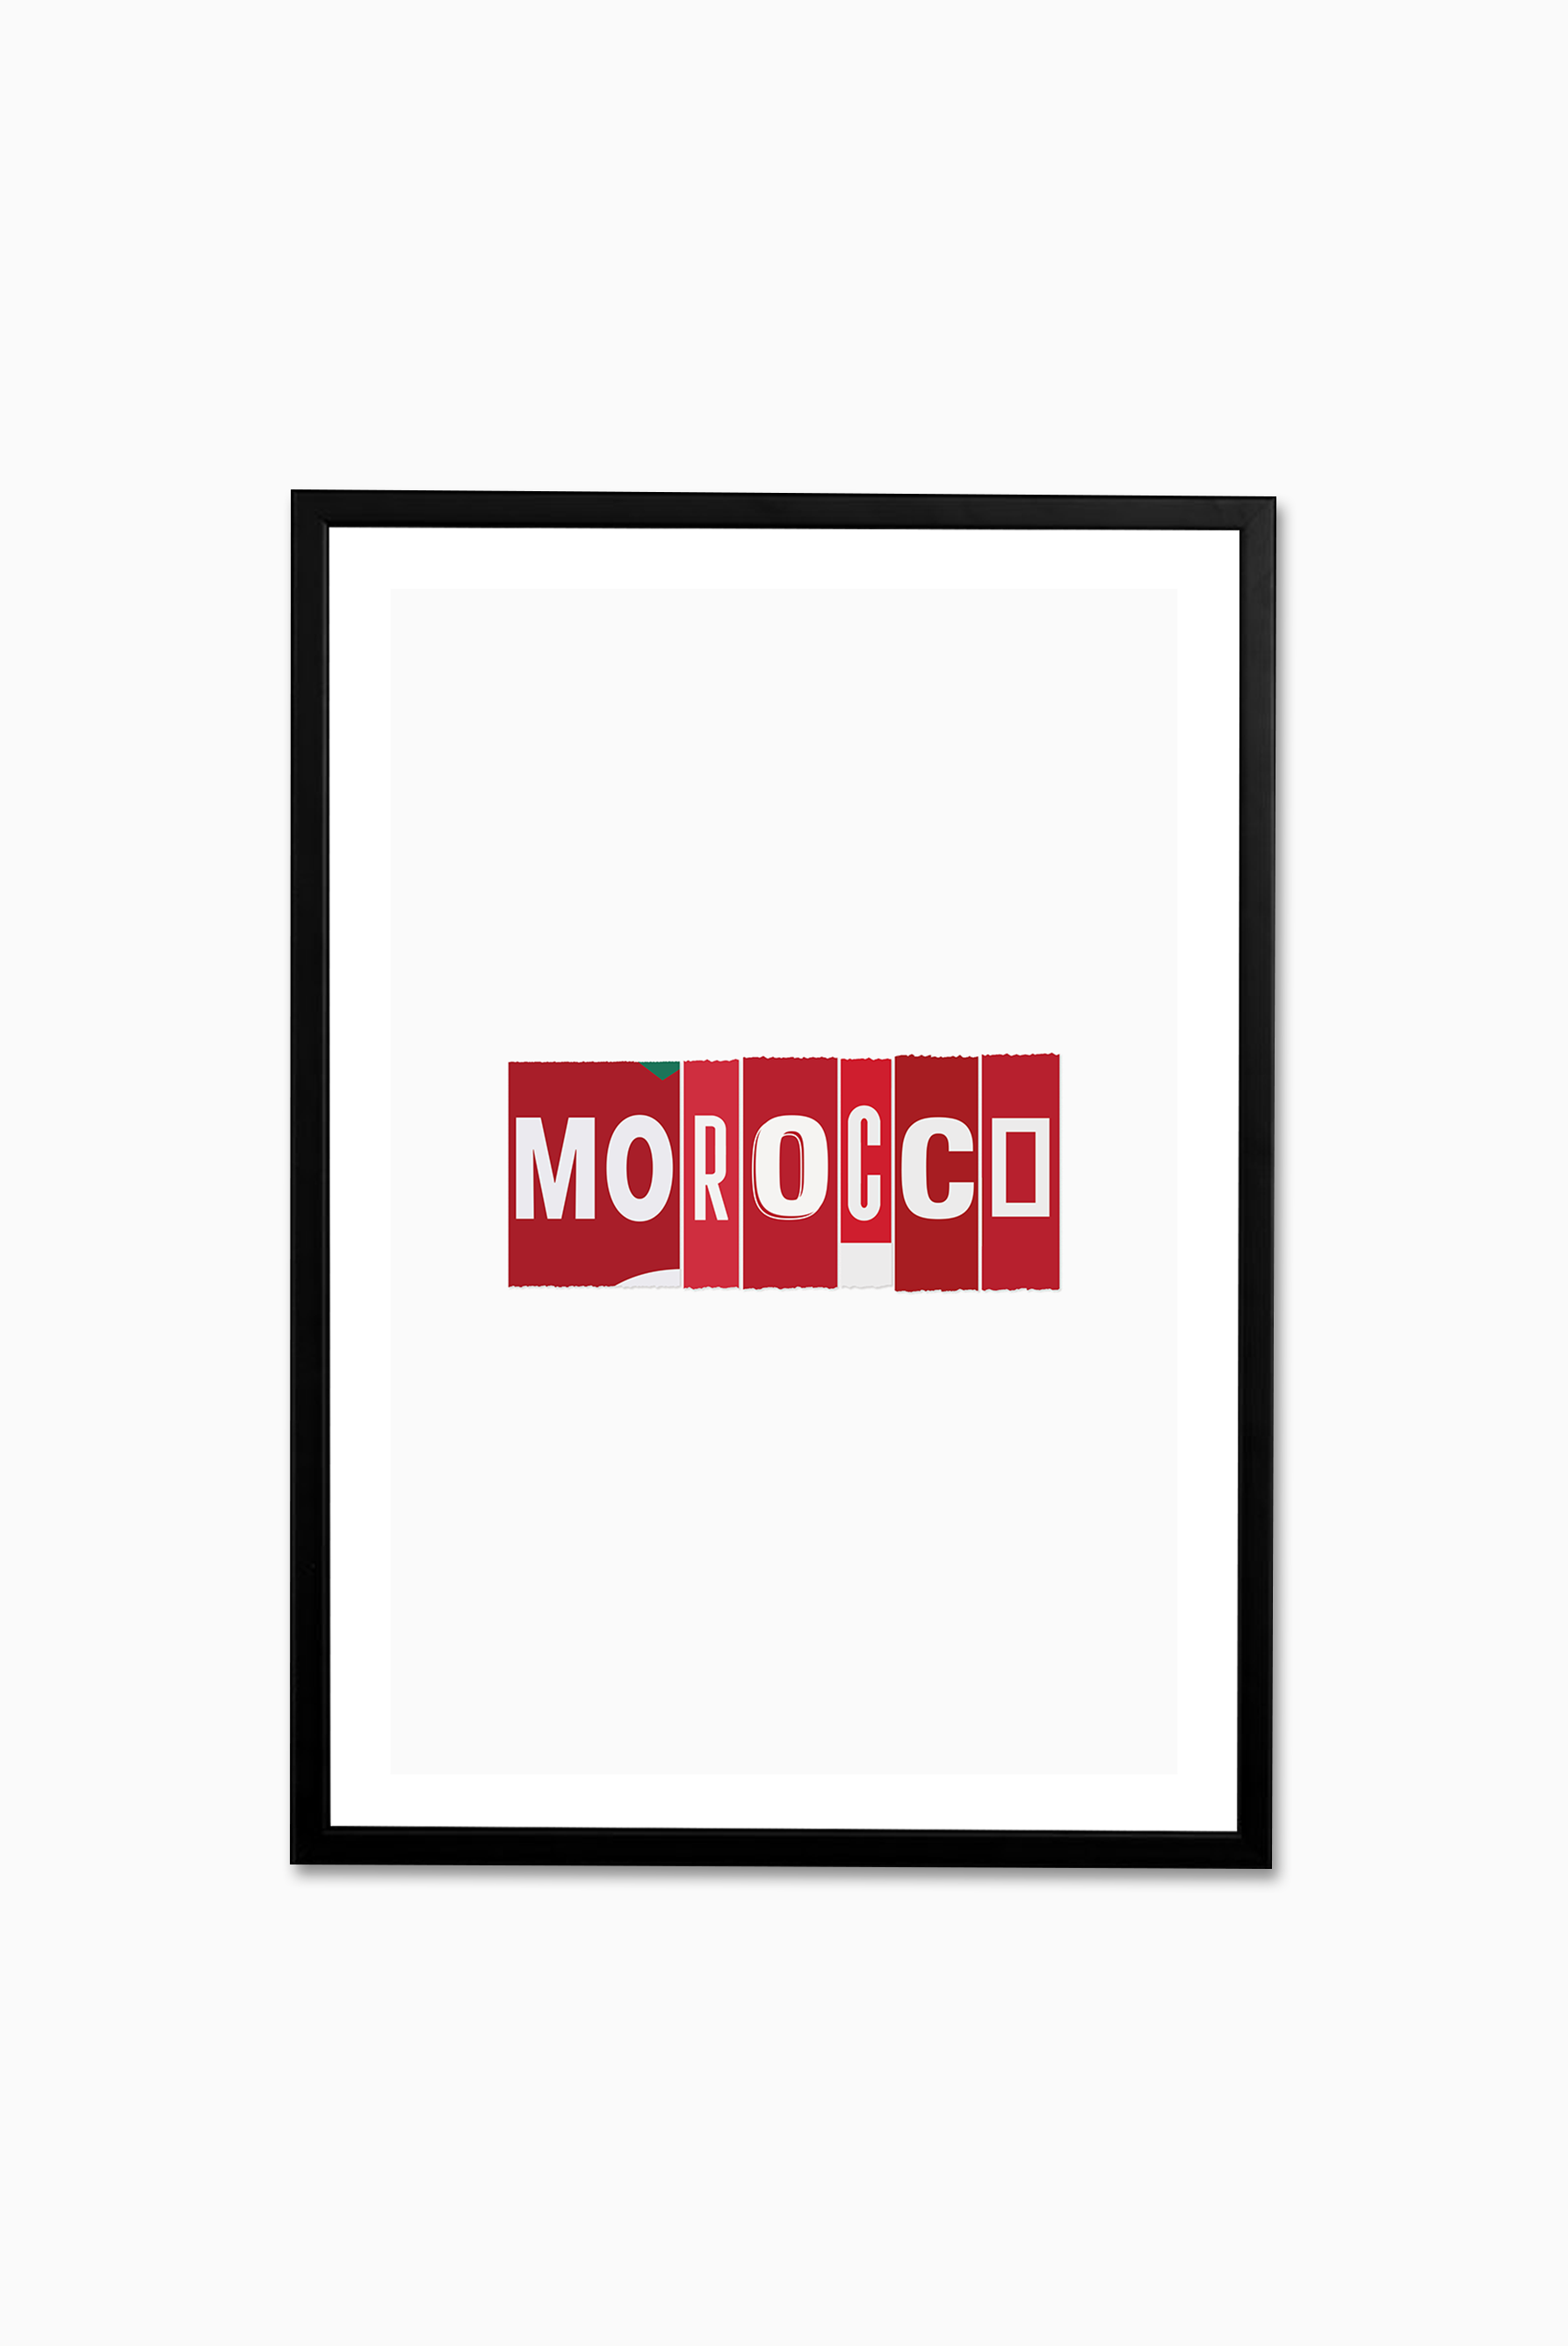 Morocco Wear and Tear / Print